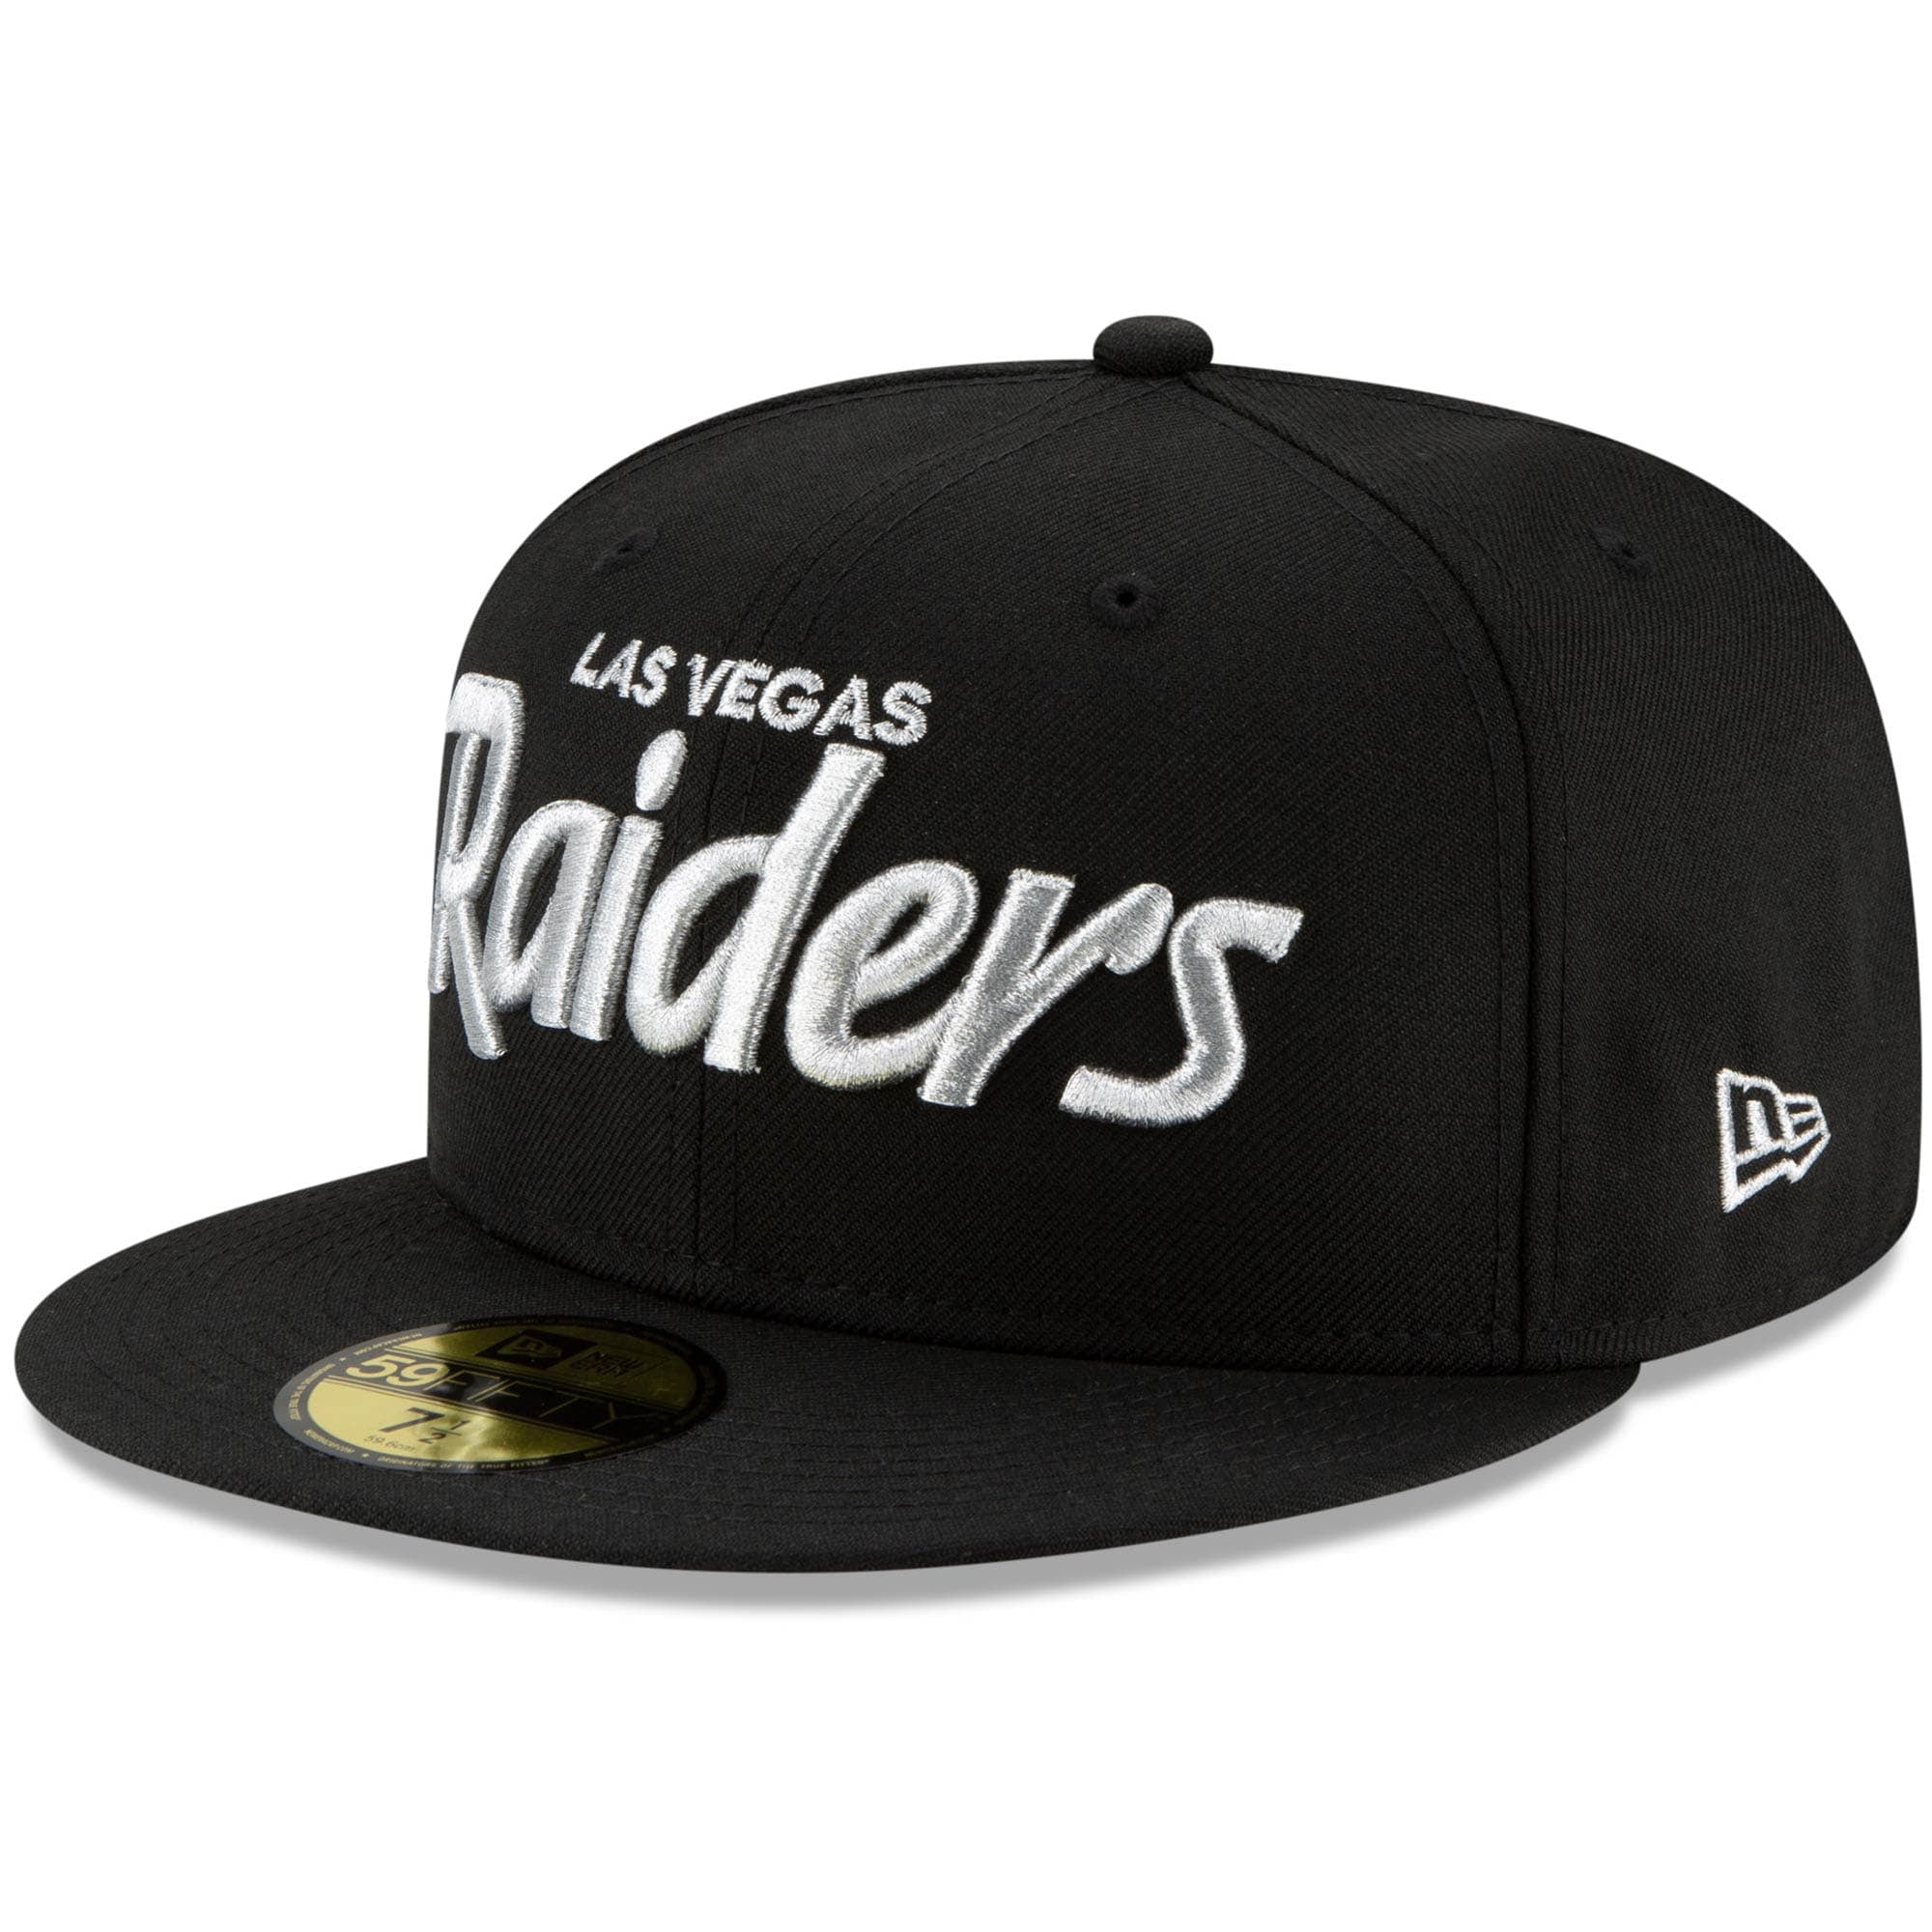 Las Vegas Raiders Black on Black Metal Badge New Era 59FIFTY Fitted cap hat 